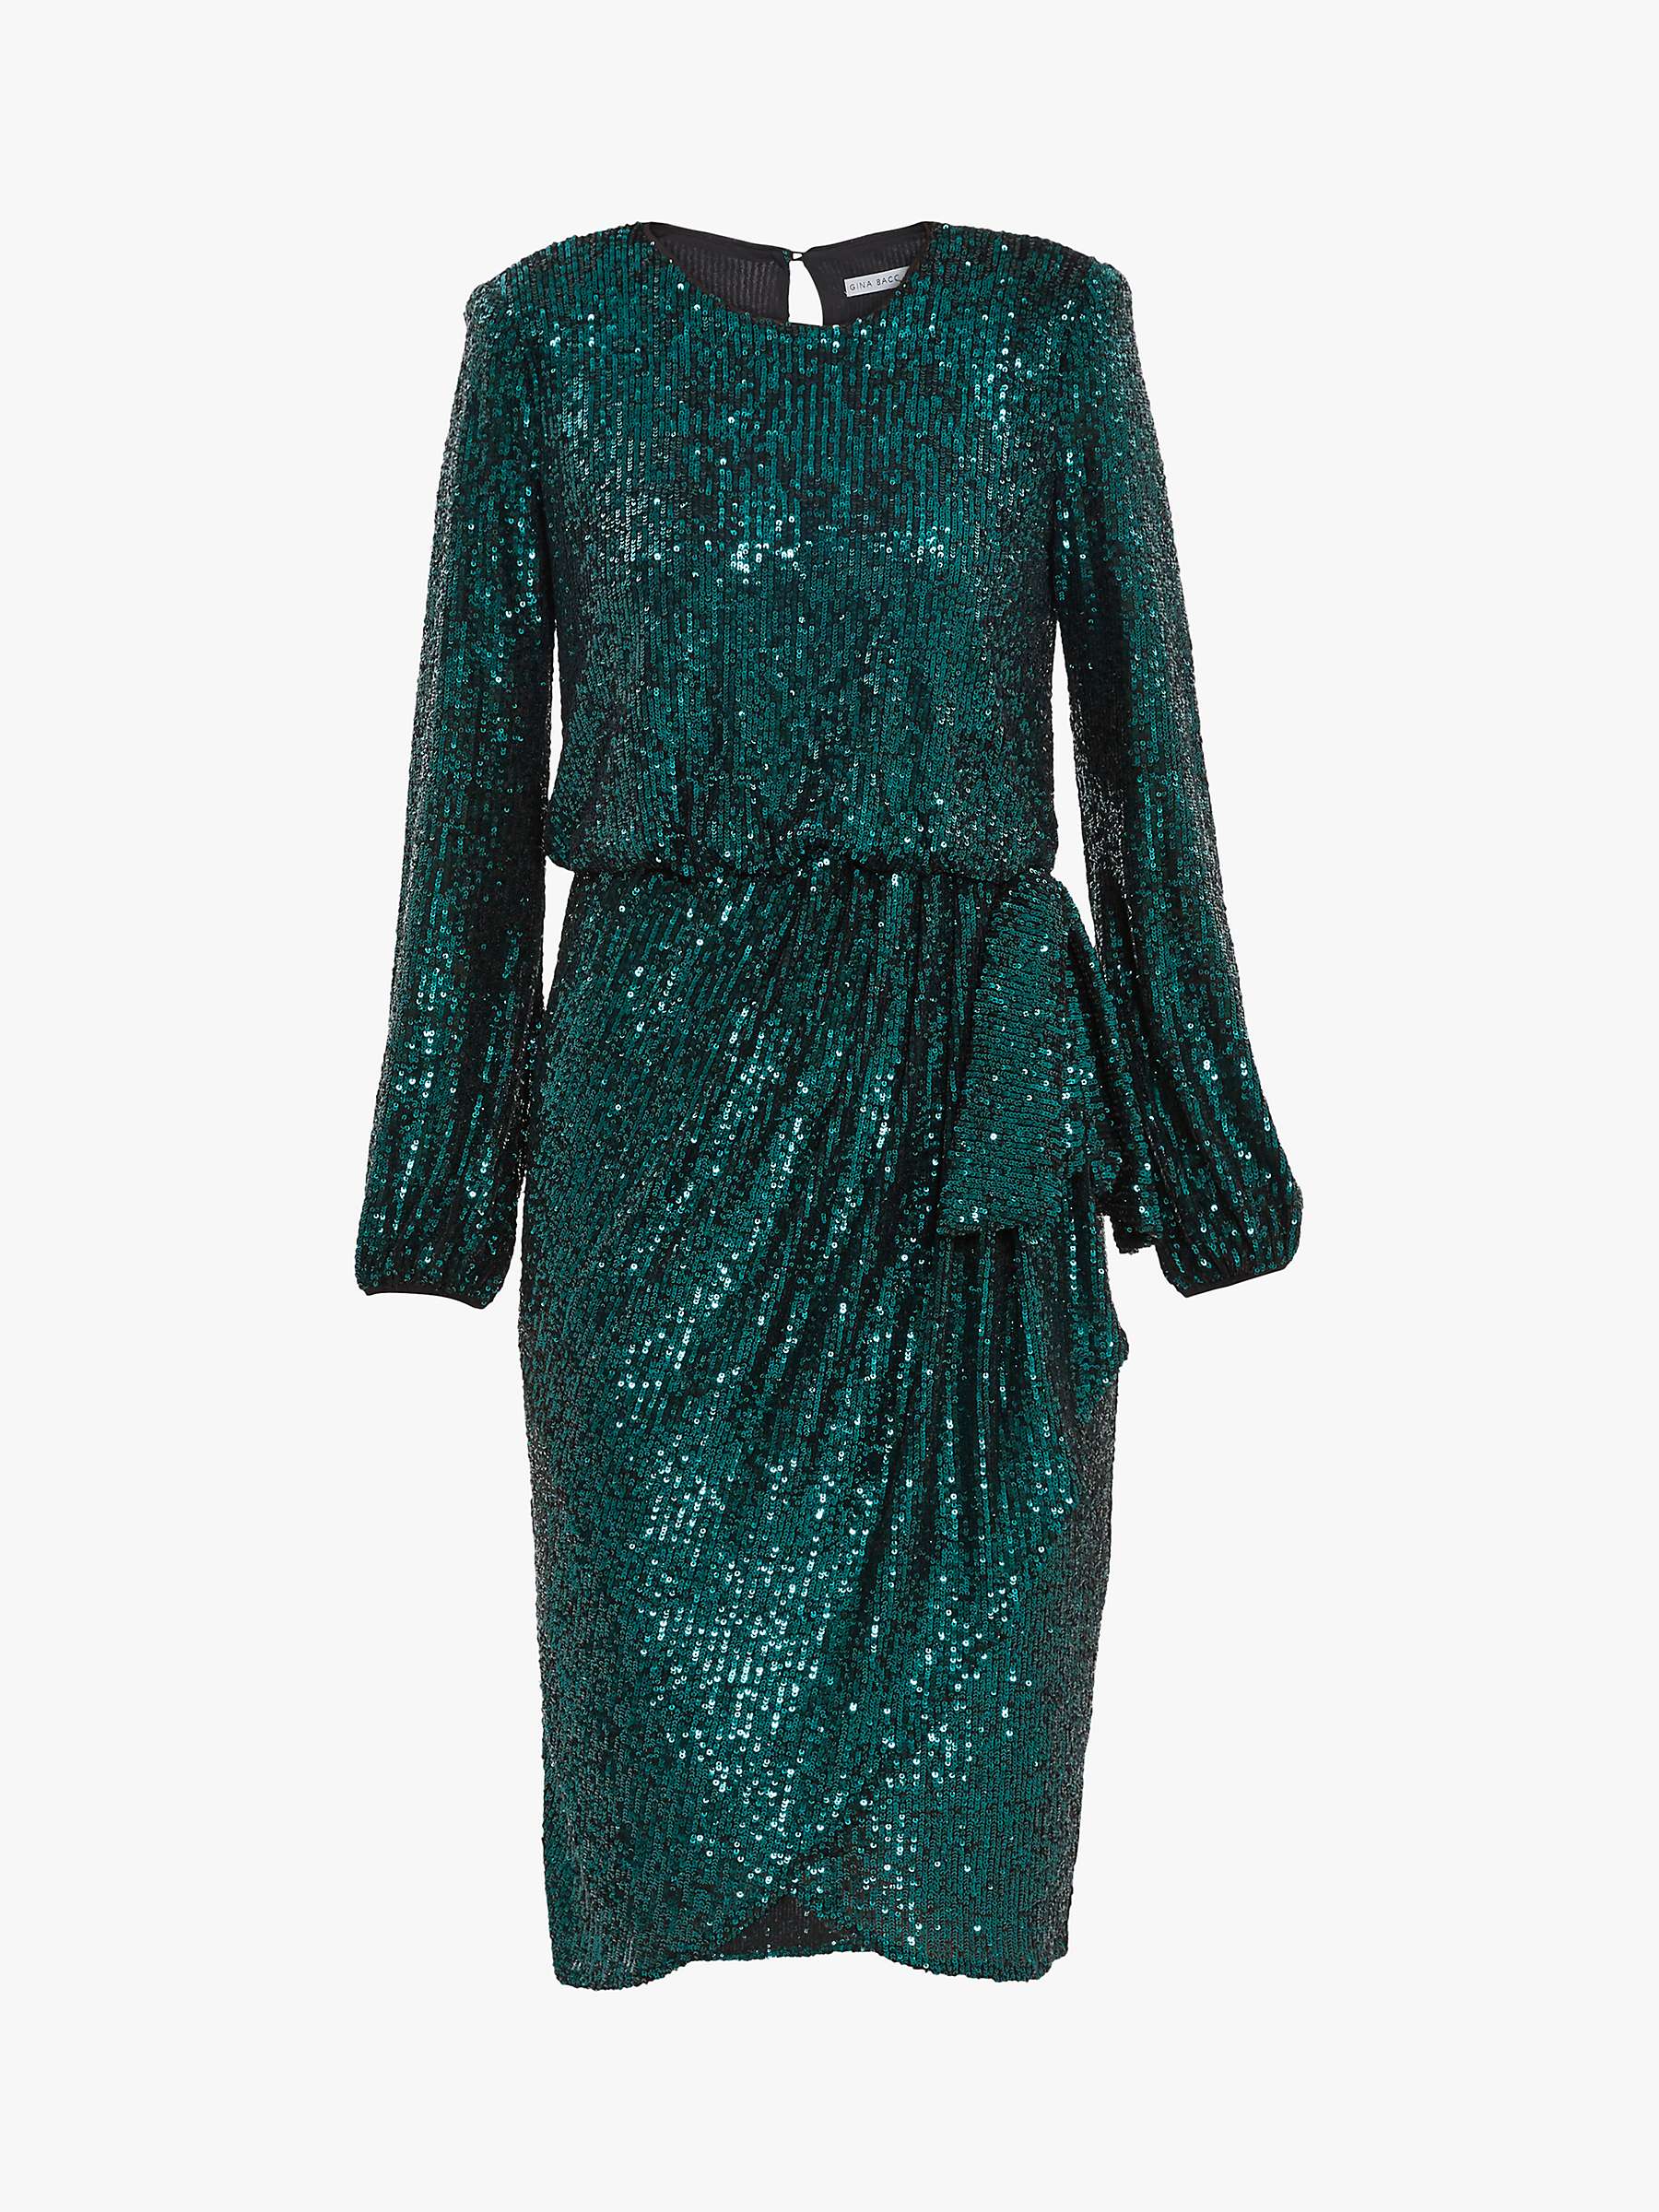 Gina Bacconi Pieta Sequin Dress, Dark Green at John Lewis & Partners